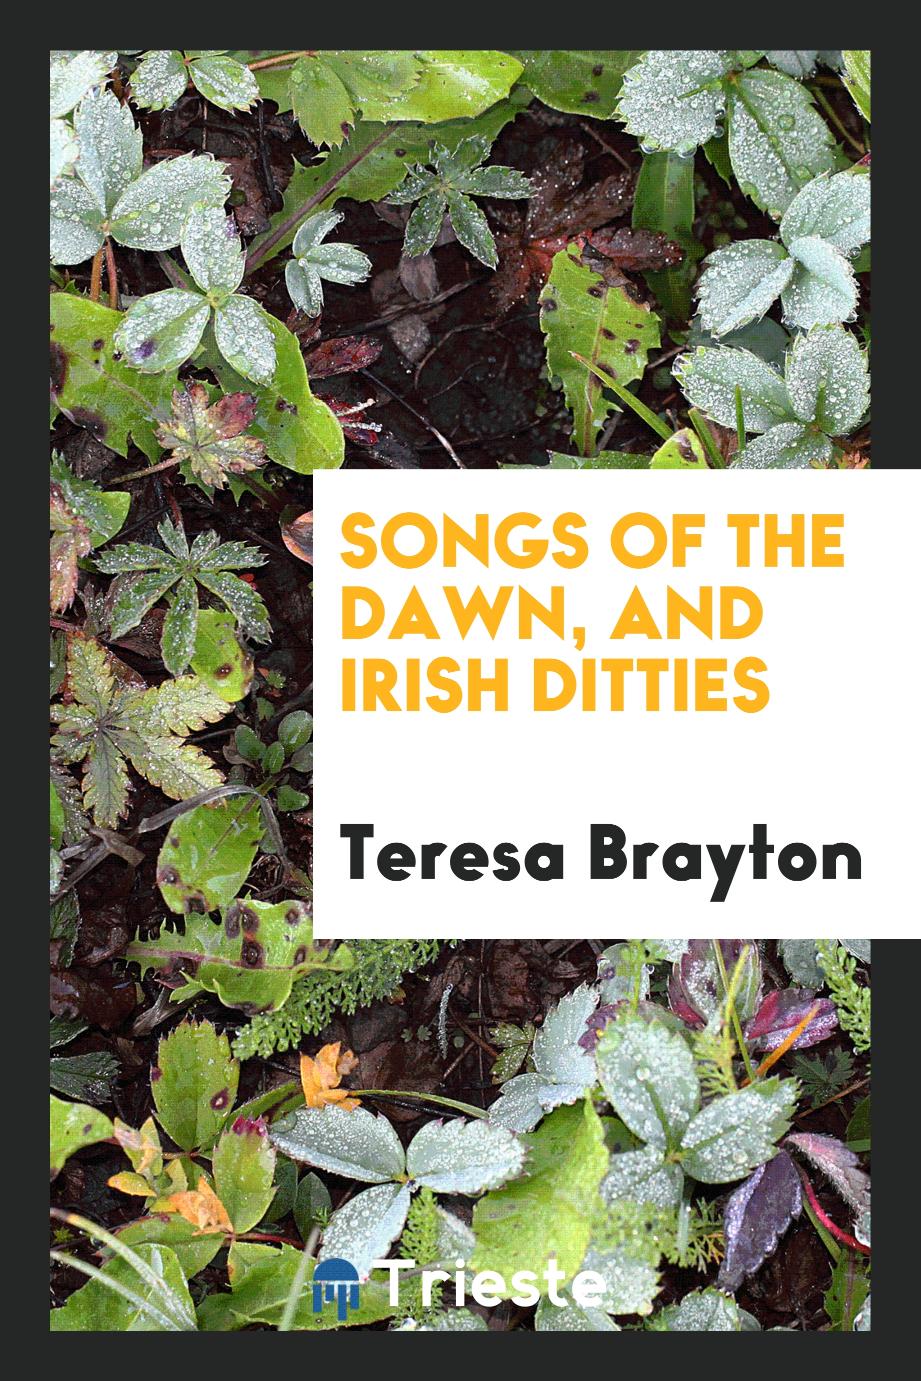 Songs of the dawn, and Irish ditties